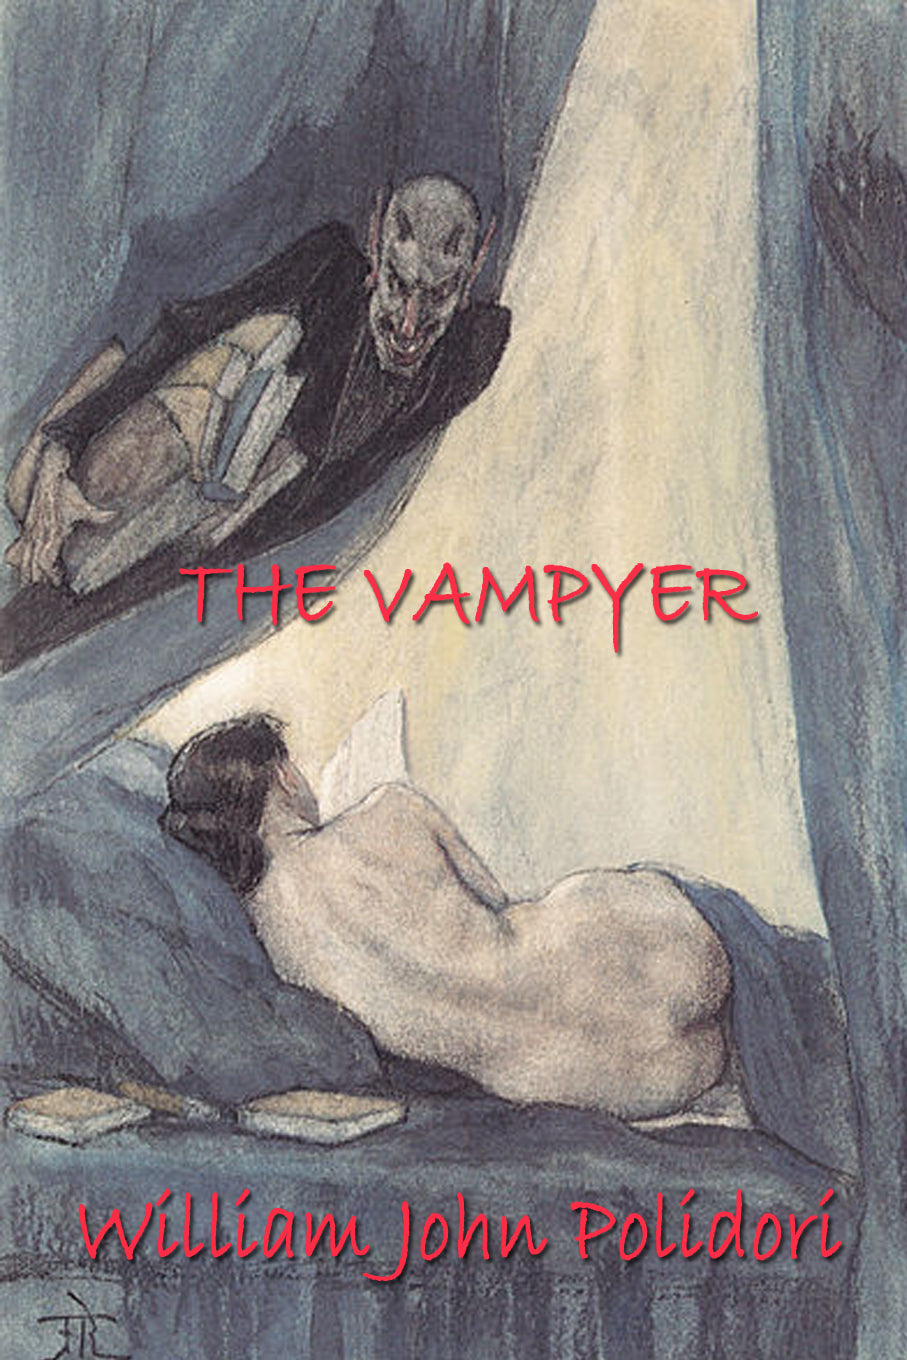 Cover art for The Vampyre.